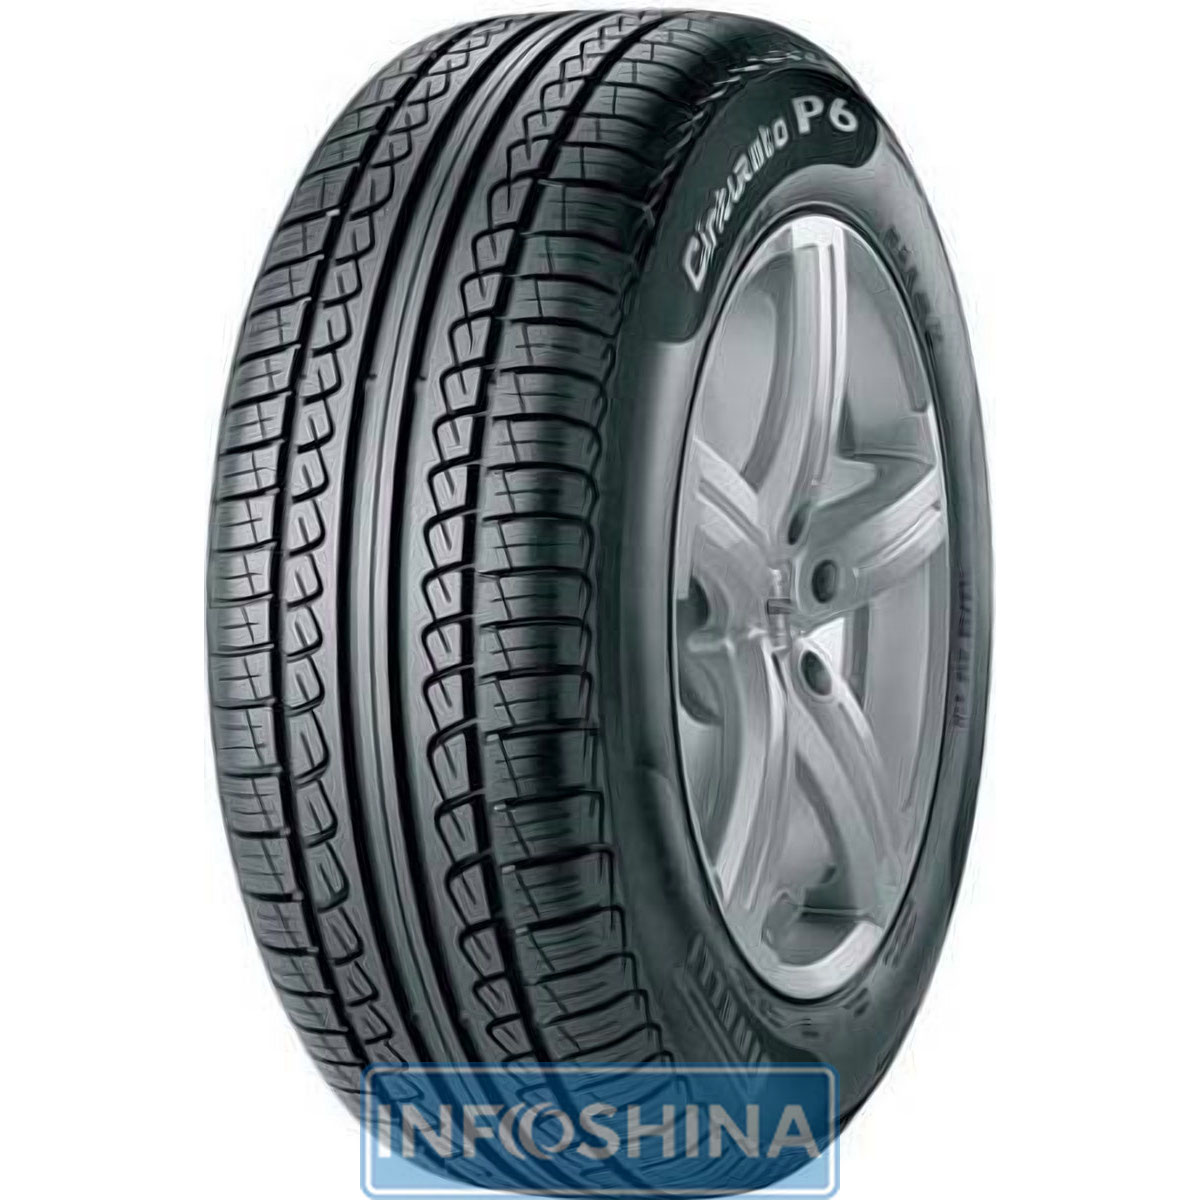 Купить шины Pirelli Cinturato P6 195/55 R15 85H